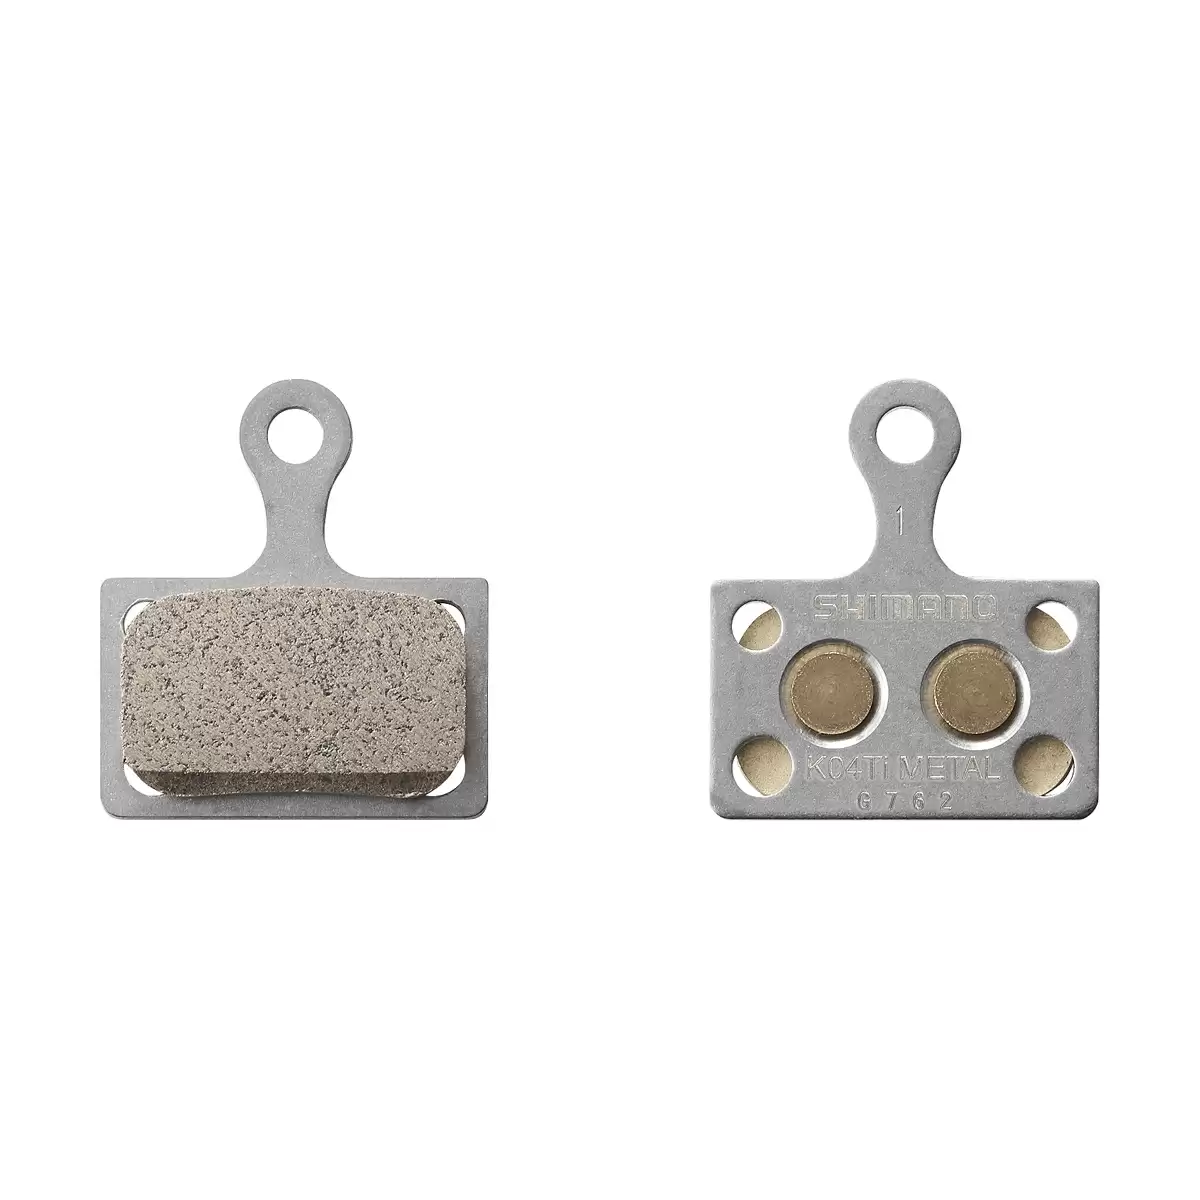 Pair of K04TI metal disc brake pads for XTR BR-M9100 - 2019 - image